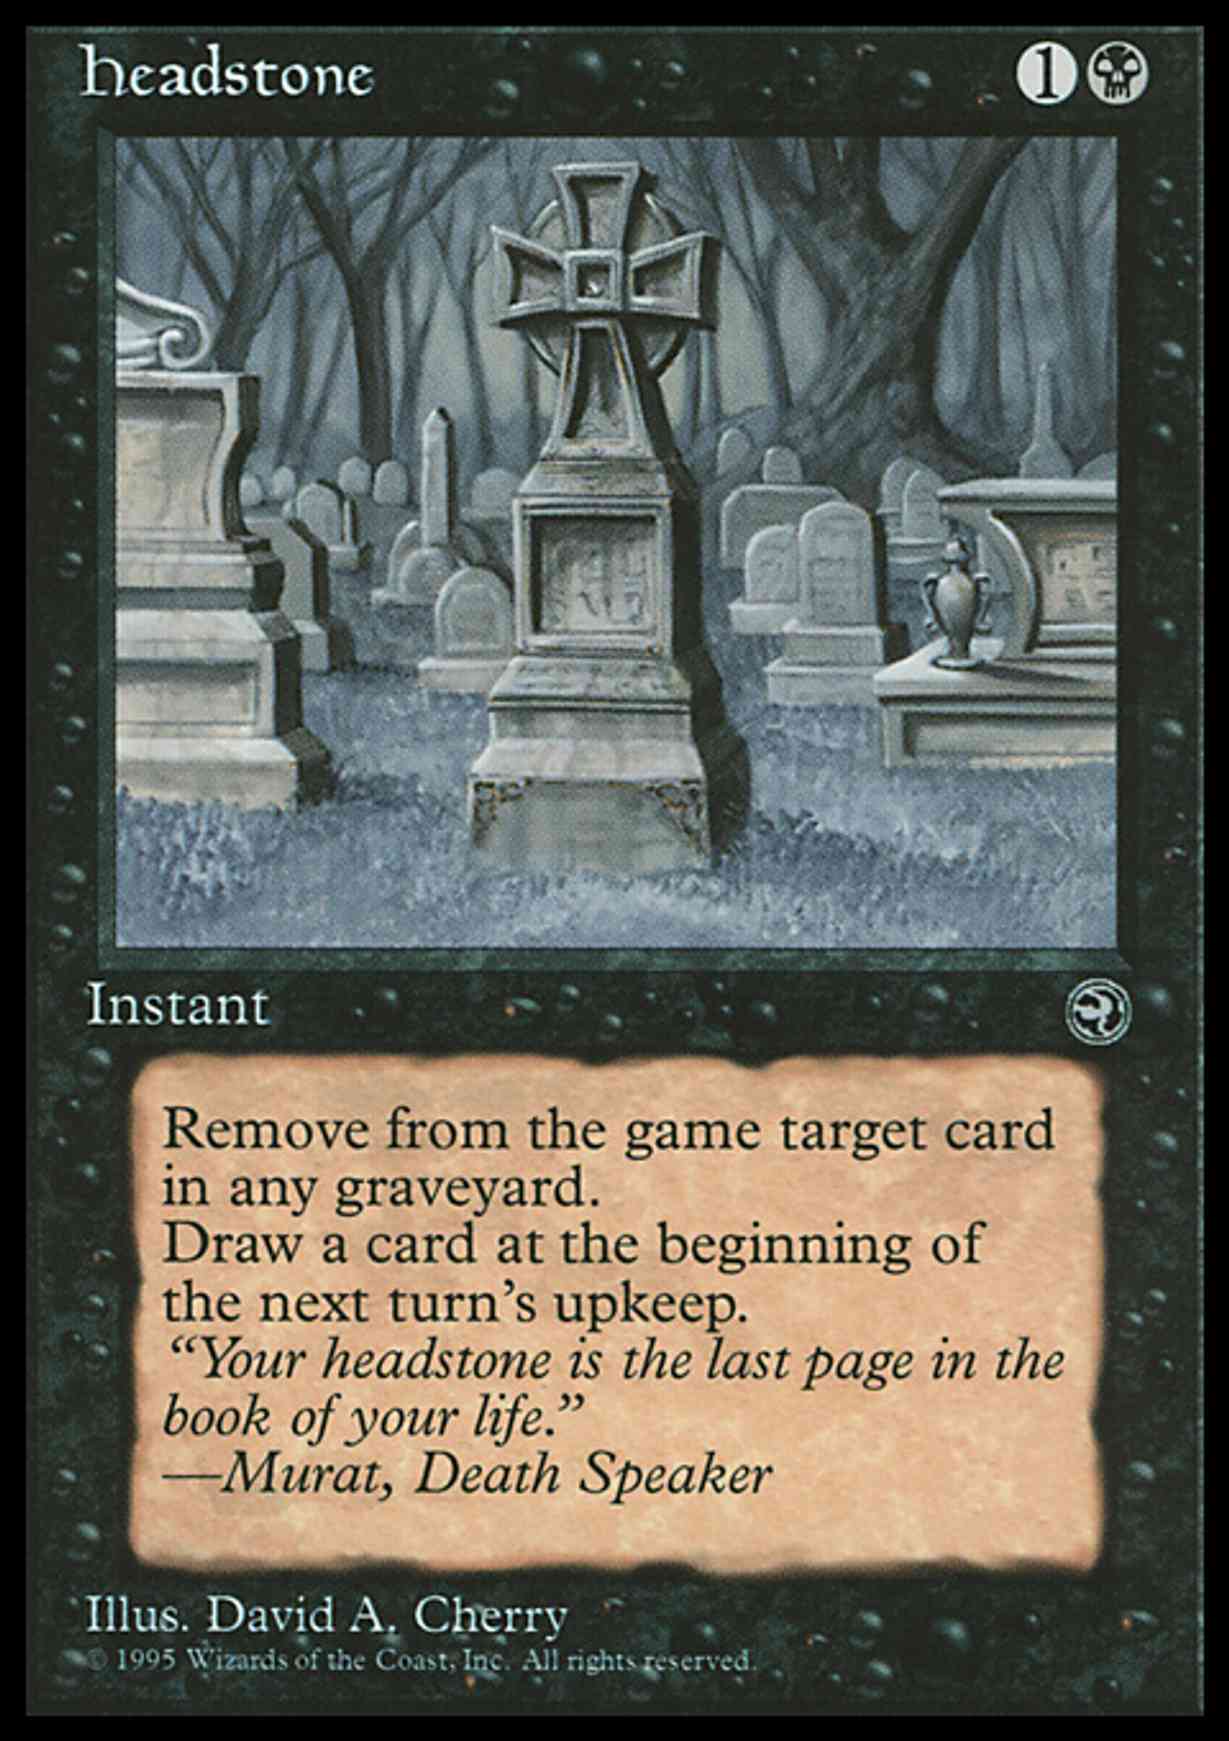 Headstone magic card front